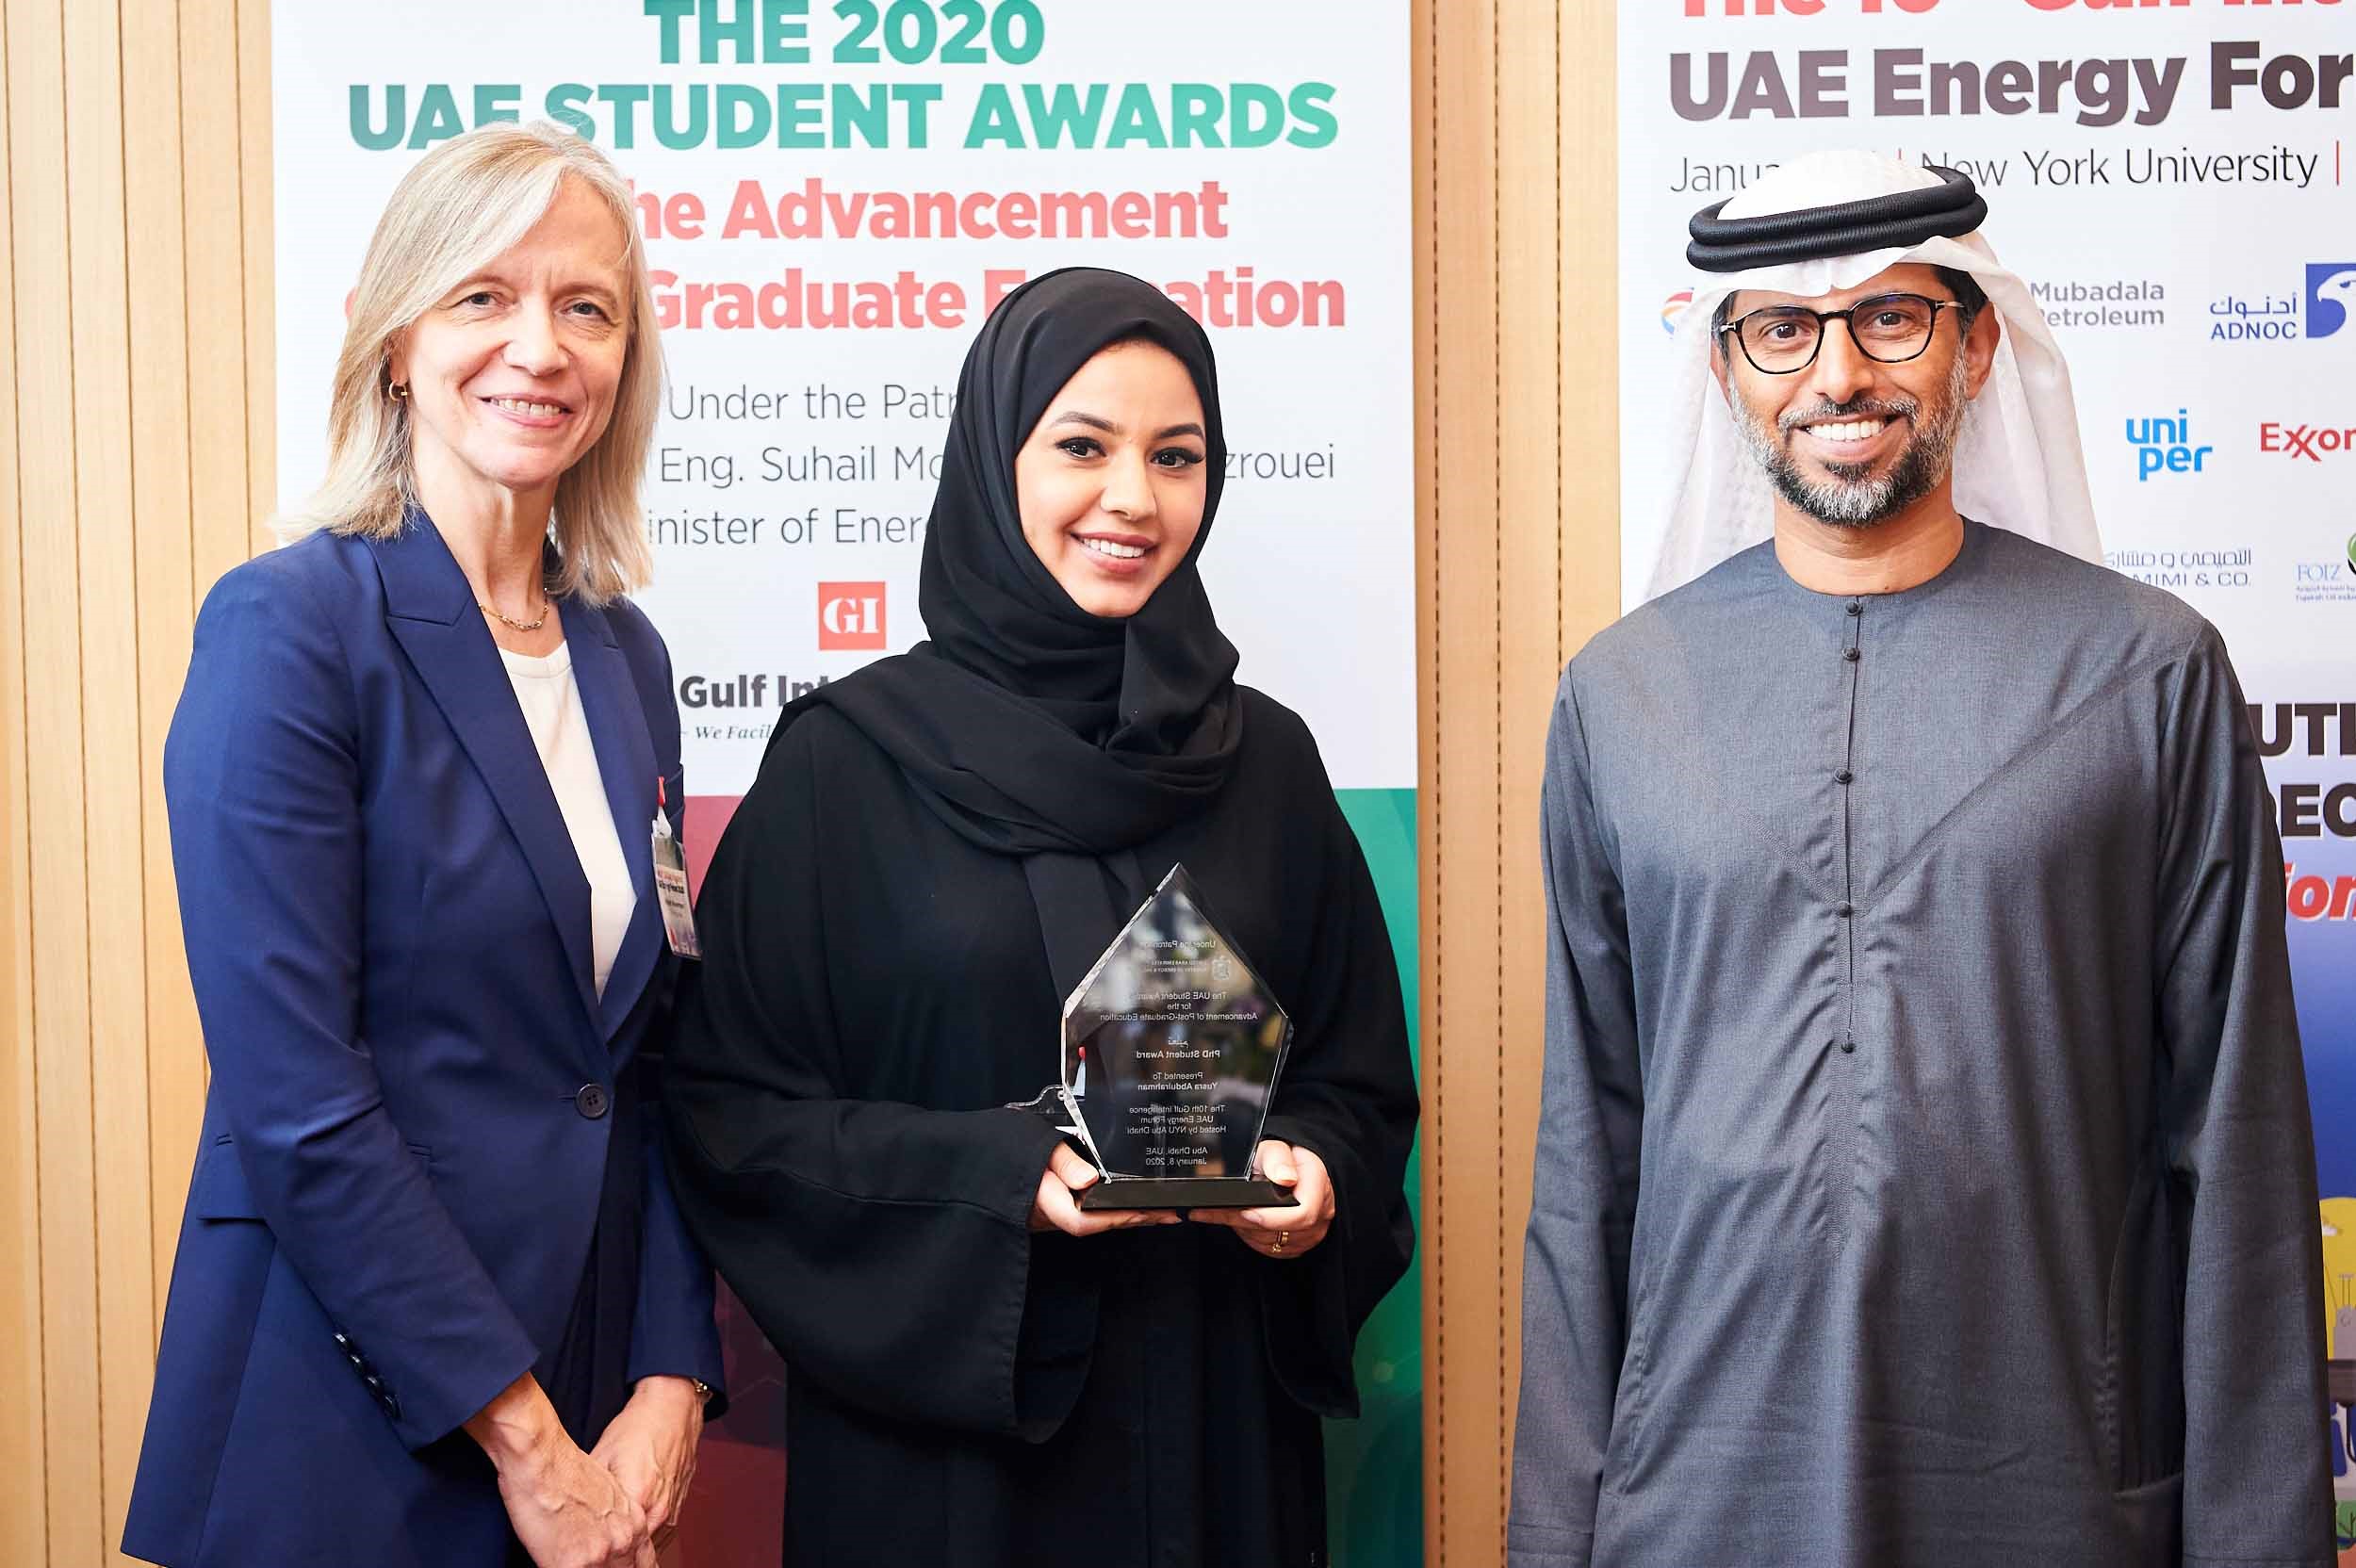 Khalifa University Student Receives UAE Student Award for the Advancement of Postgraduate Education 2020